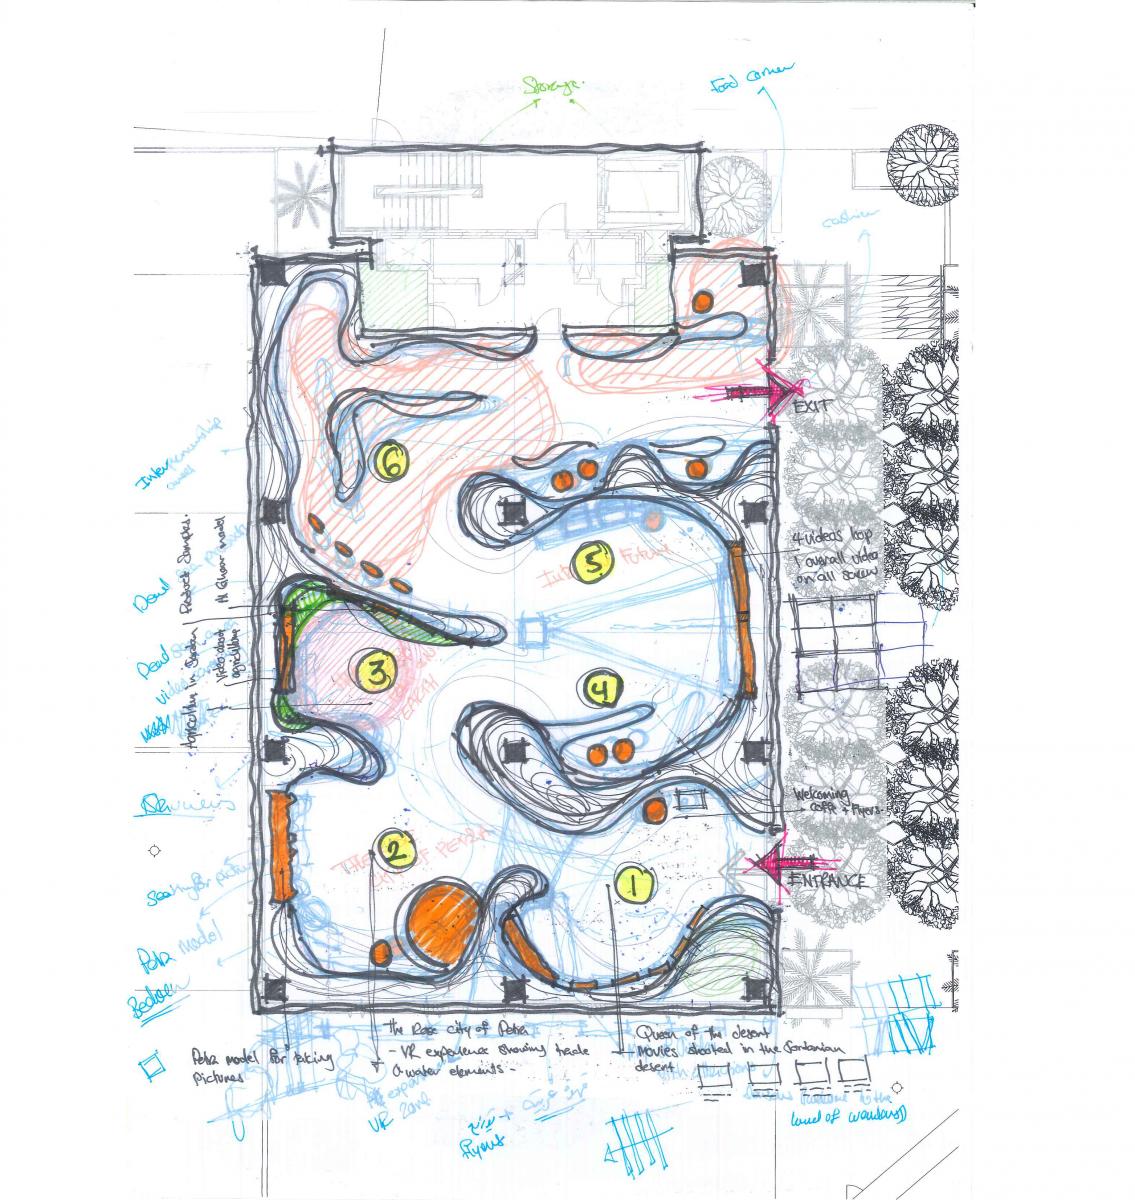 Jordan Pavilion at Expo Dubai 2020 Hand Drawn Architectural Concept Sketch